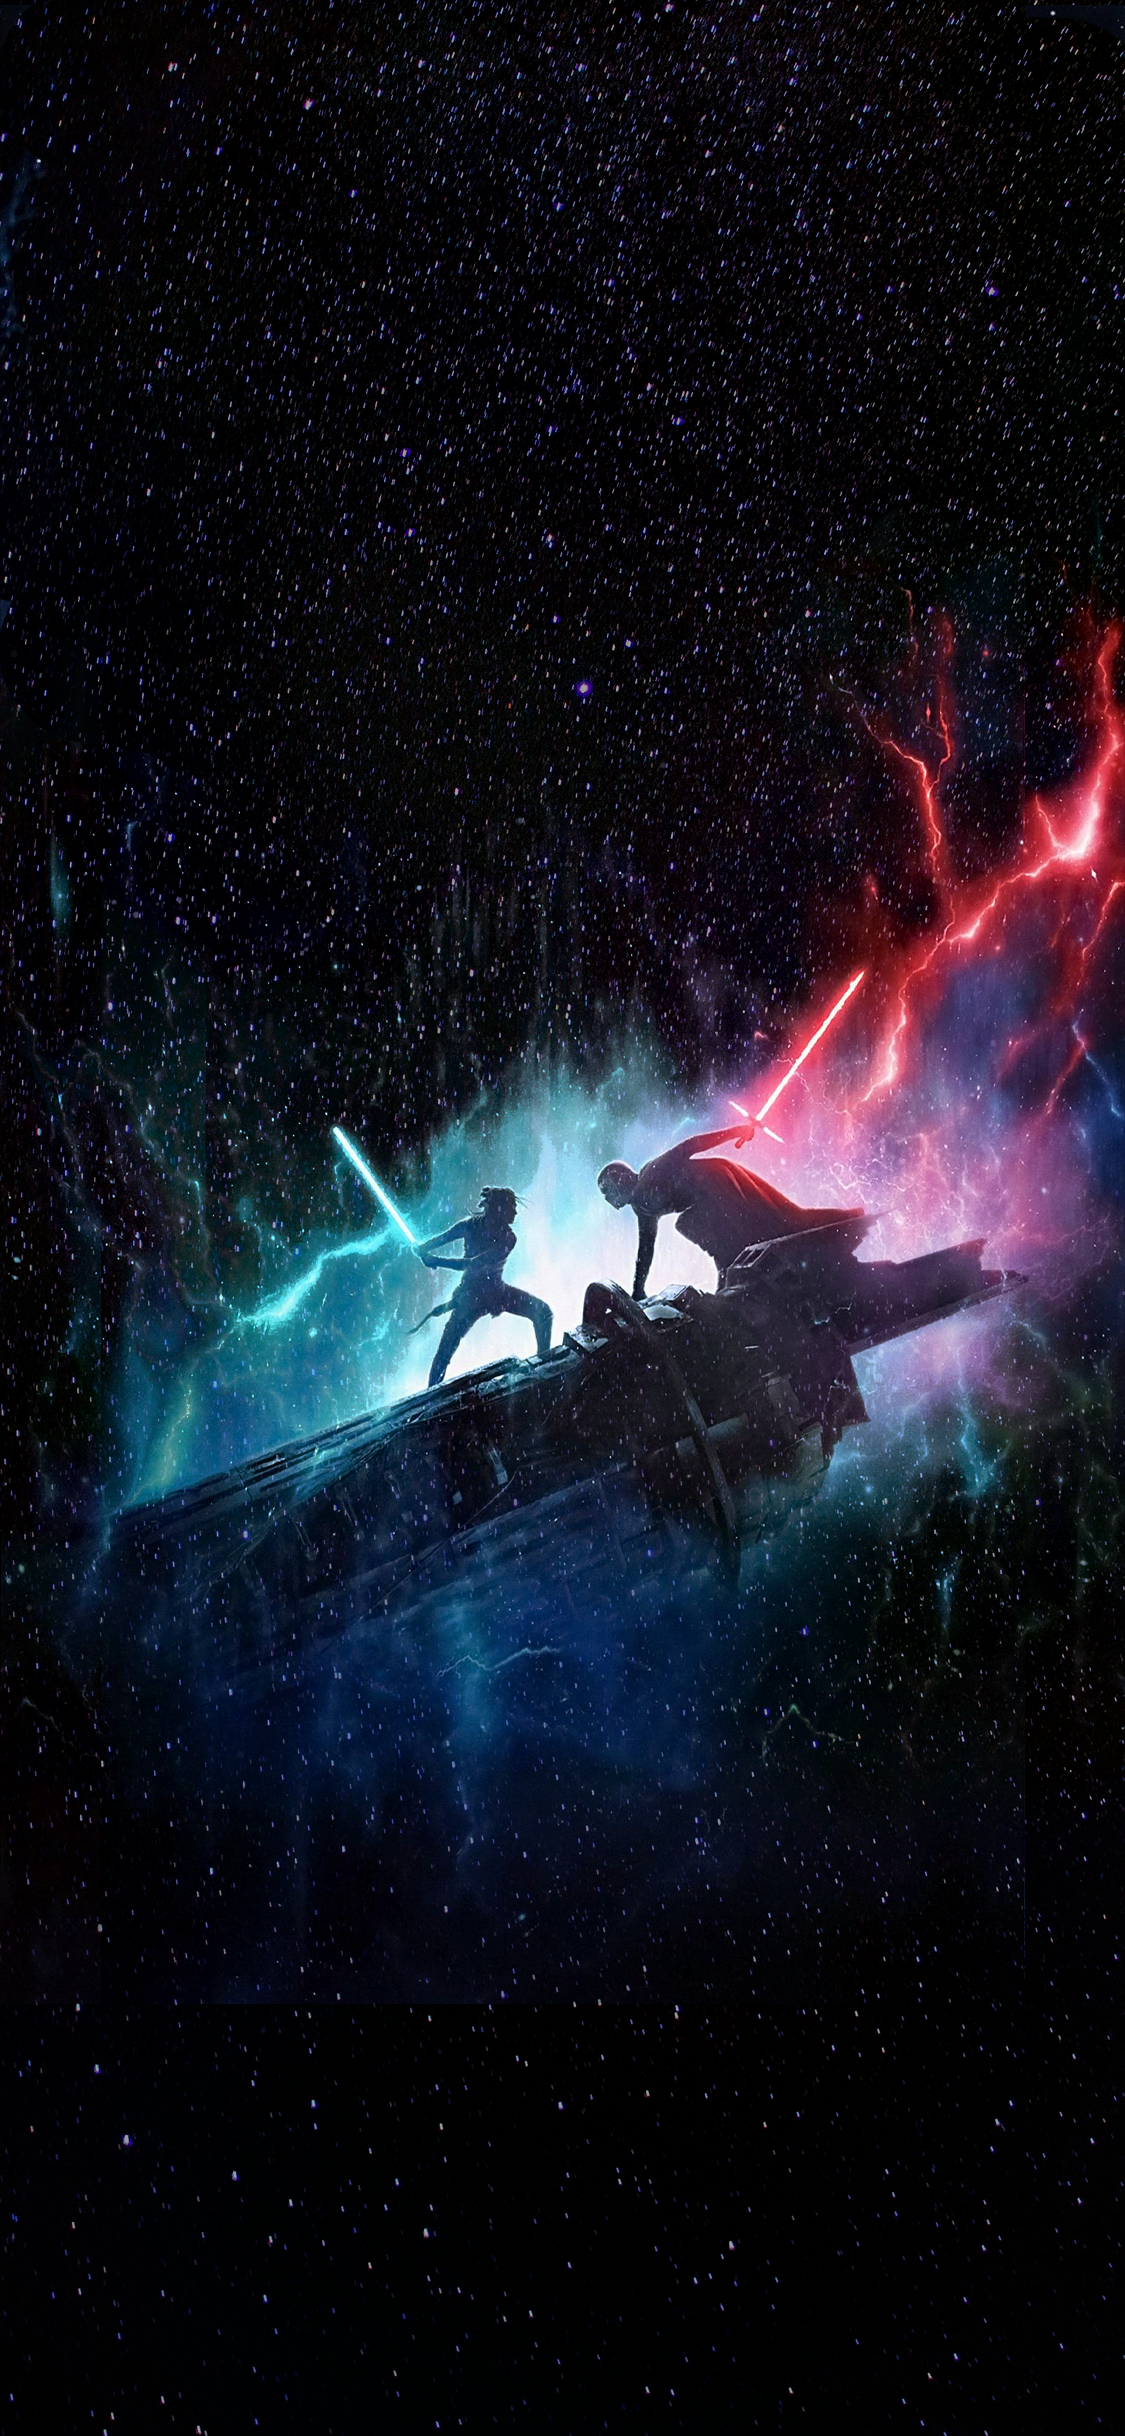 1125x2436 7 Star Wars Rise of Skywalker phone wallpapers | HEROSCREEN | Star wars poster, Star wars art, Star wars wallpaper